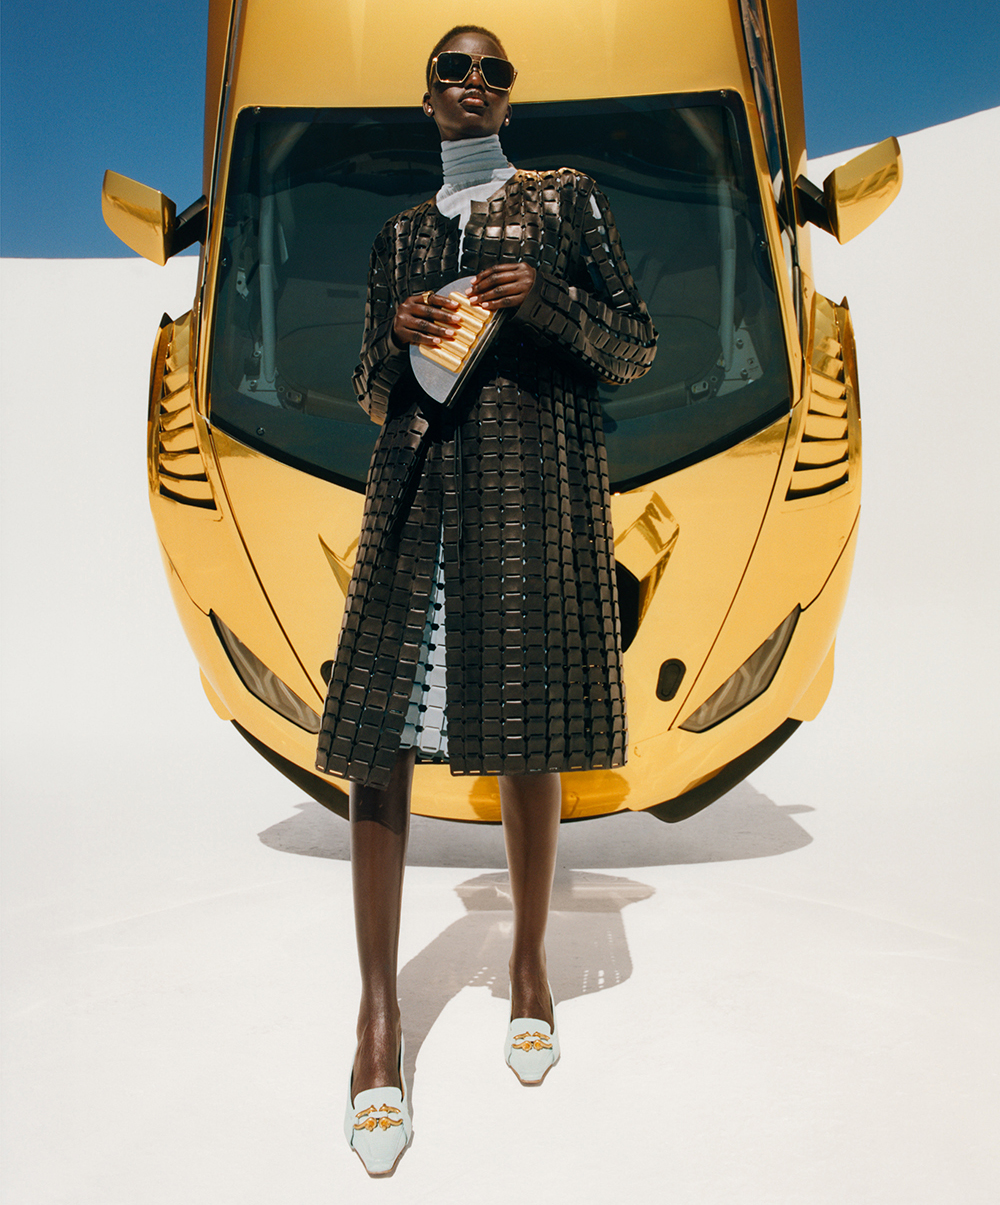 Bottega Veneta's Contemporary & Unabashed Autumn 2019 Campaign